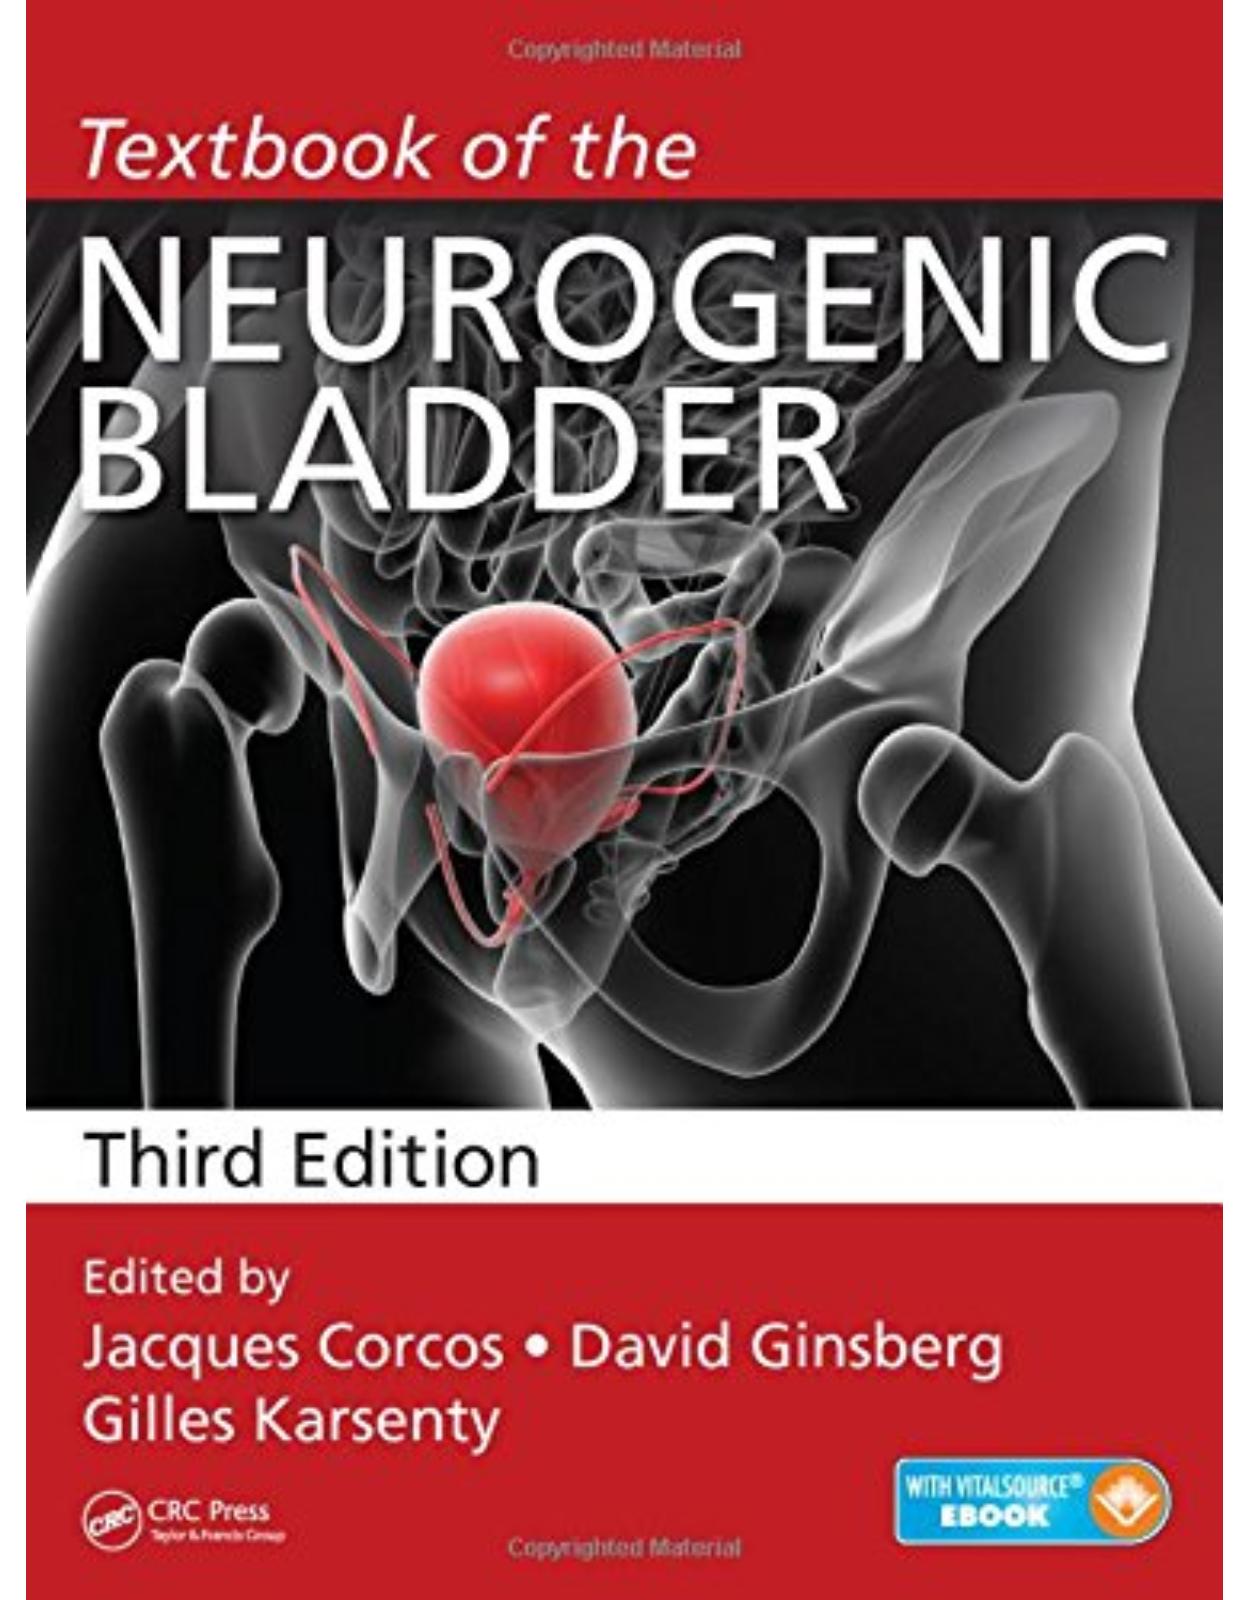 Textbook of the Neurogenic Bladder, Third Edition